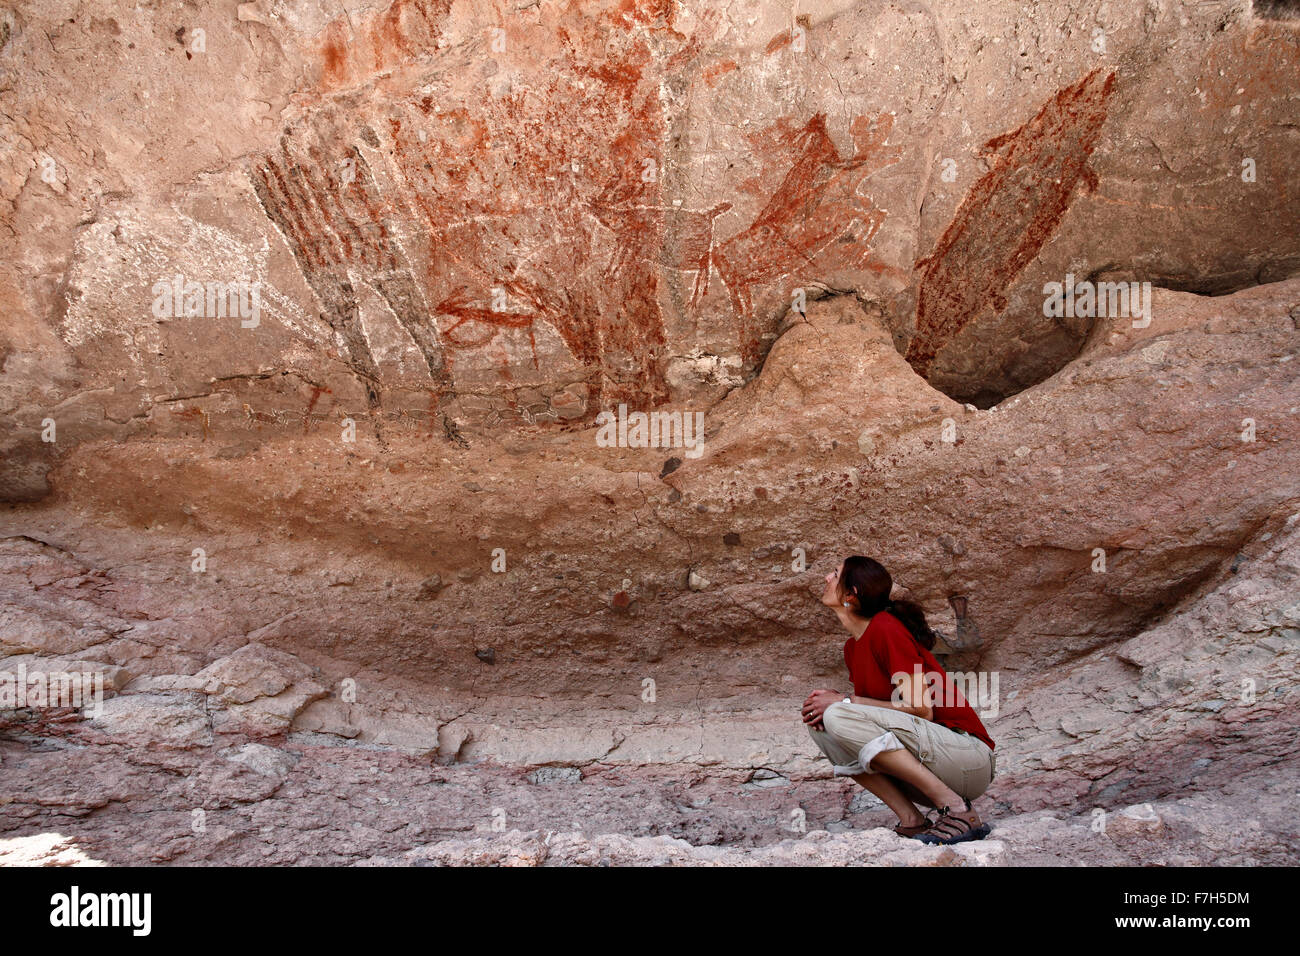 pr7176-D. woman (model released) admires petroglyph rock paintings of Santa Marta, showing people, animals (deer, rabbits, fish) Stock Photo